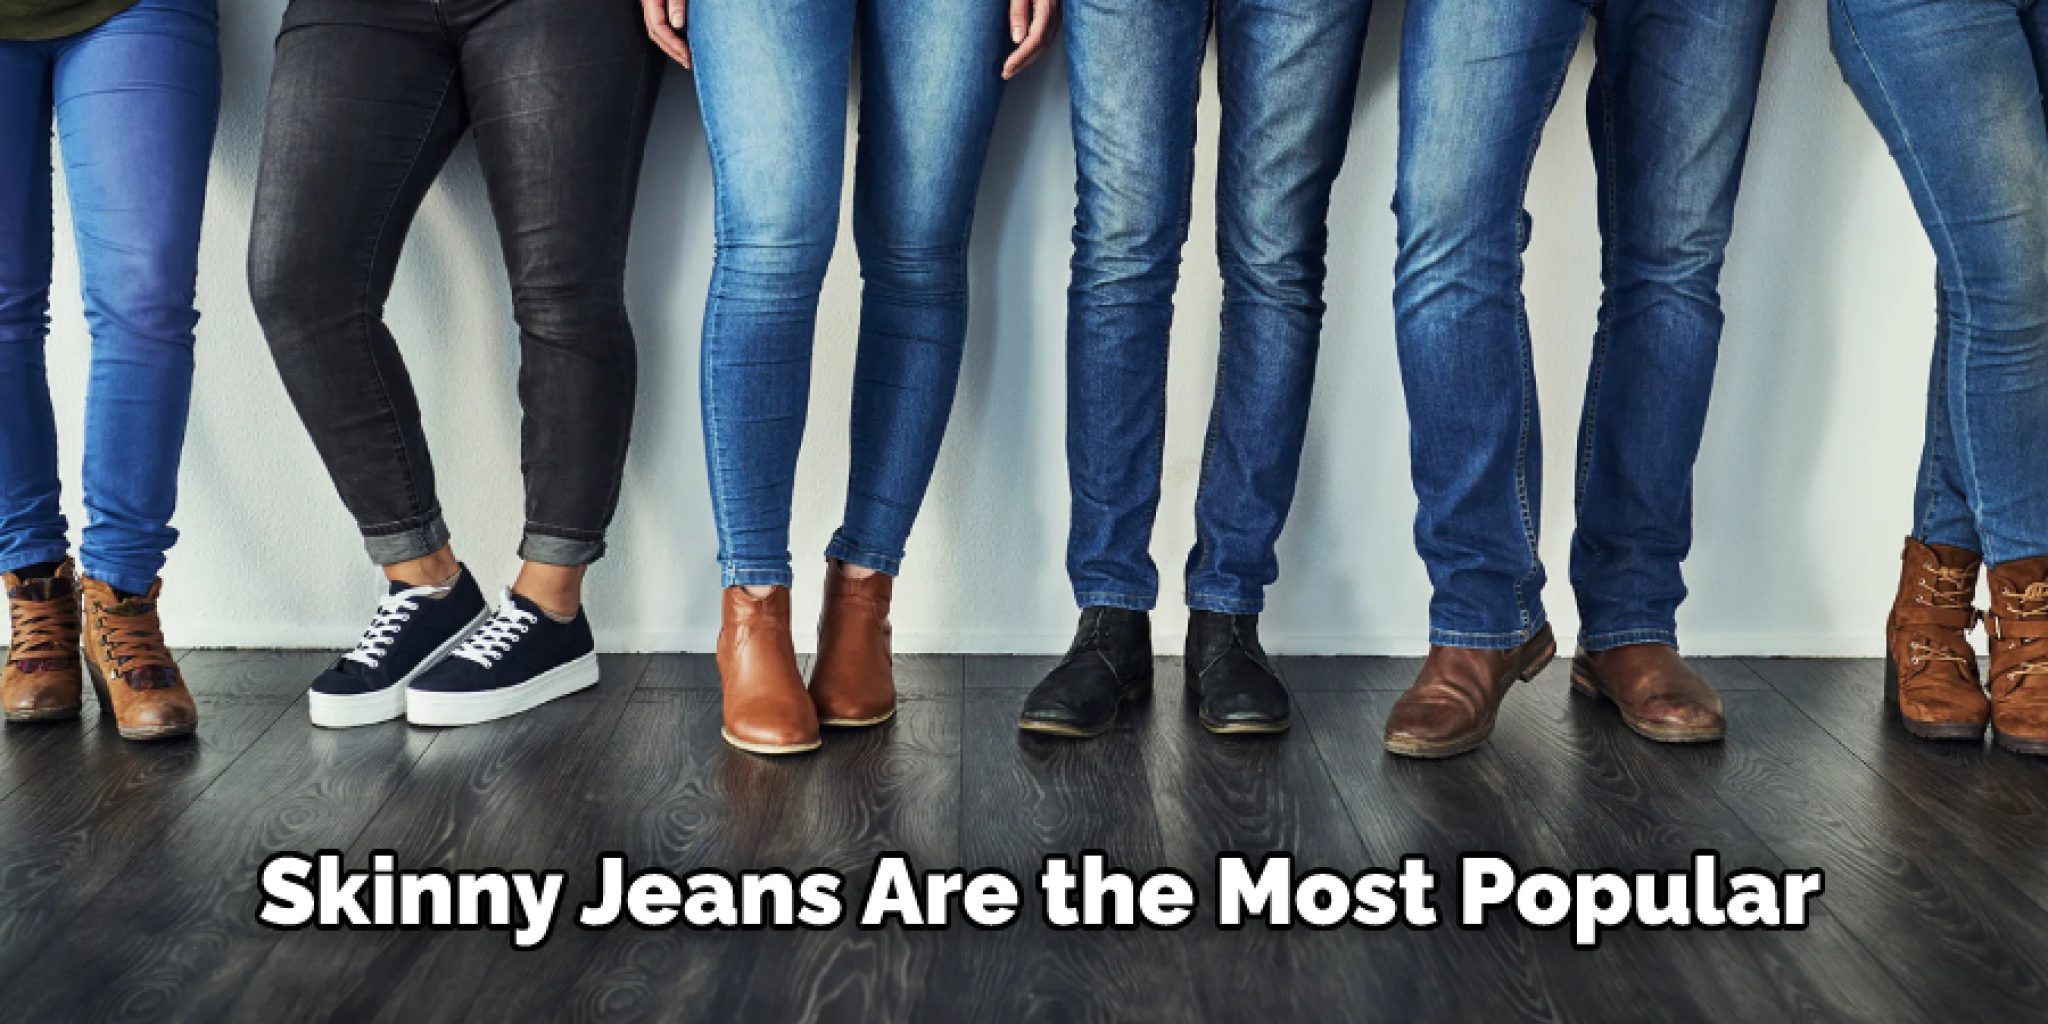 I like wearing jeans